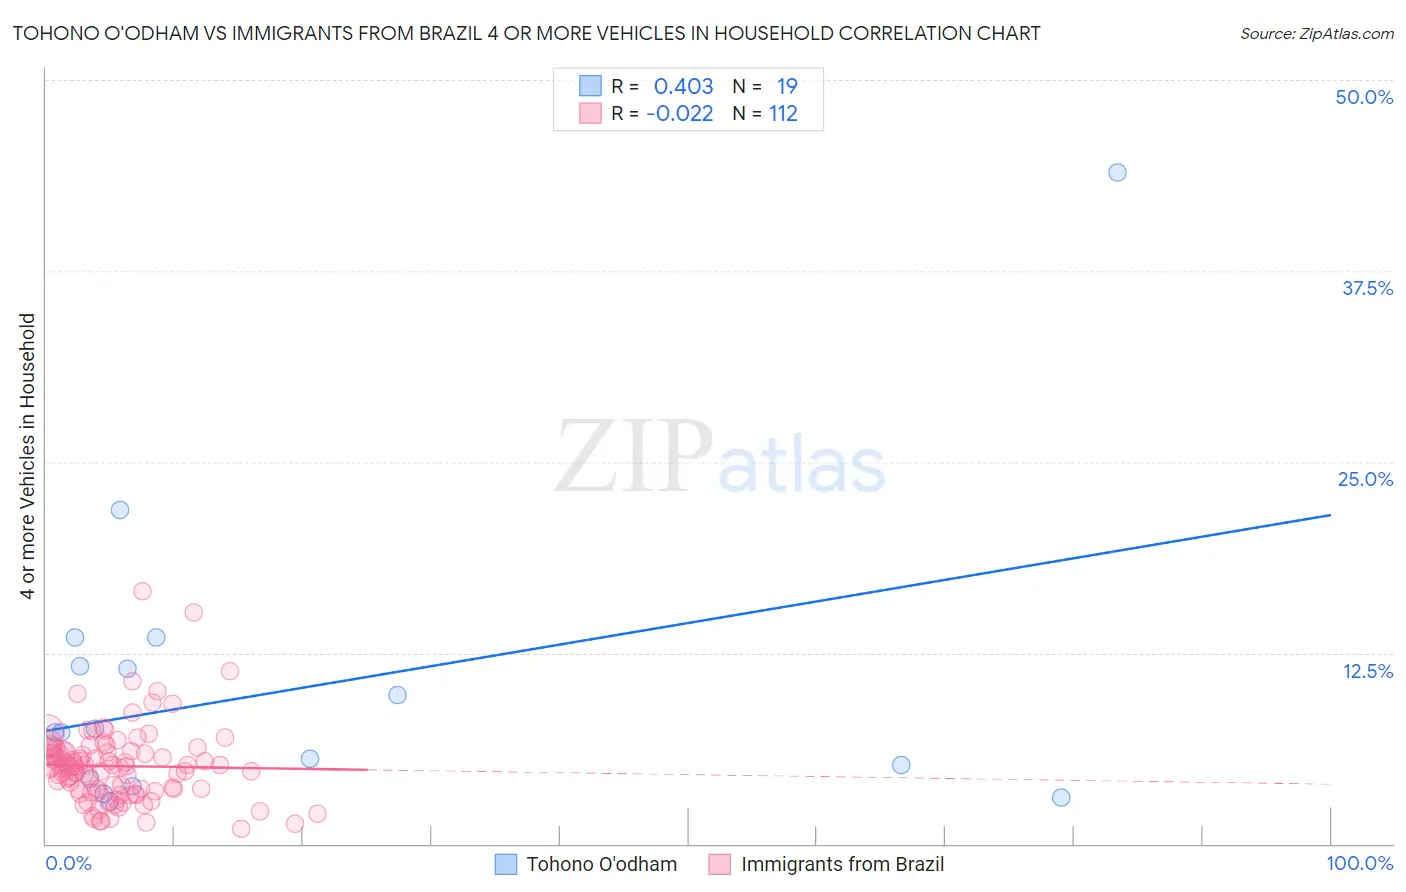 Tohono O'odham vs Immigrants from Brazil 4 or more Vehicles in Household